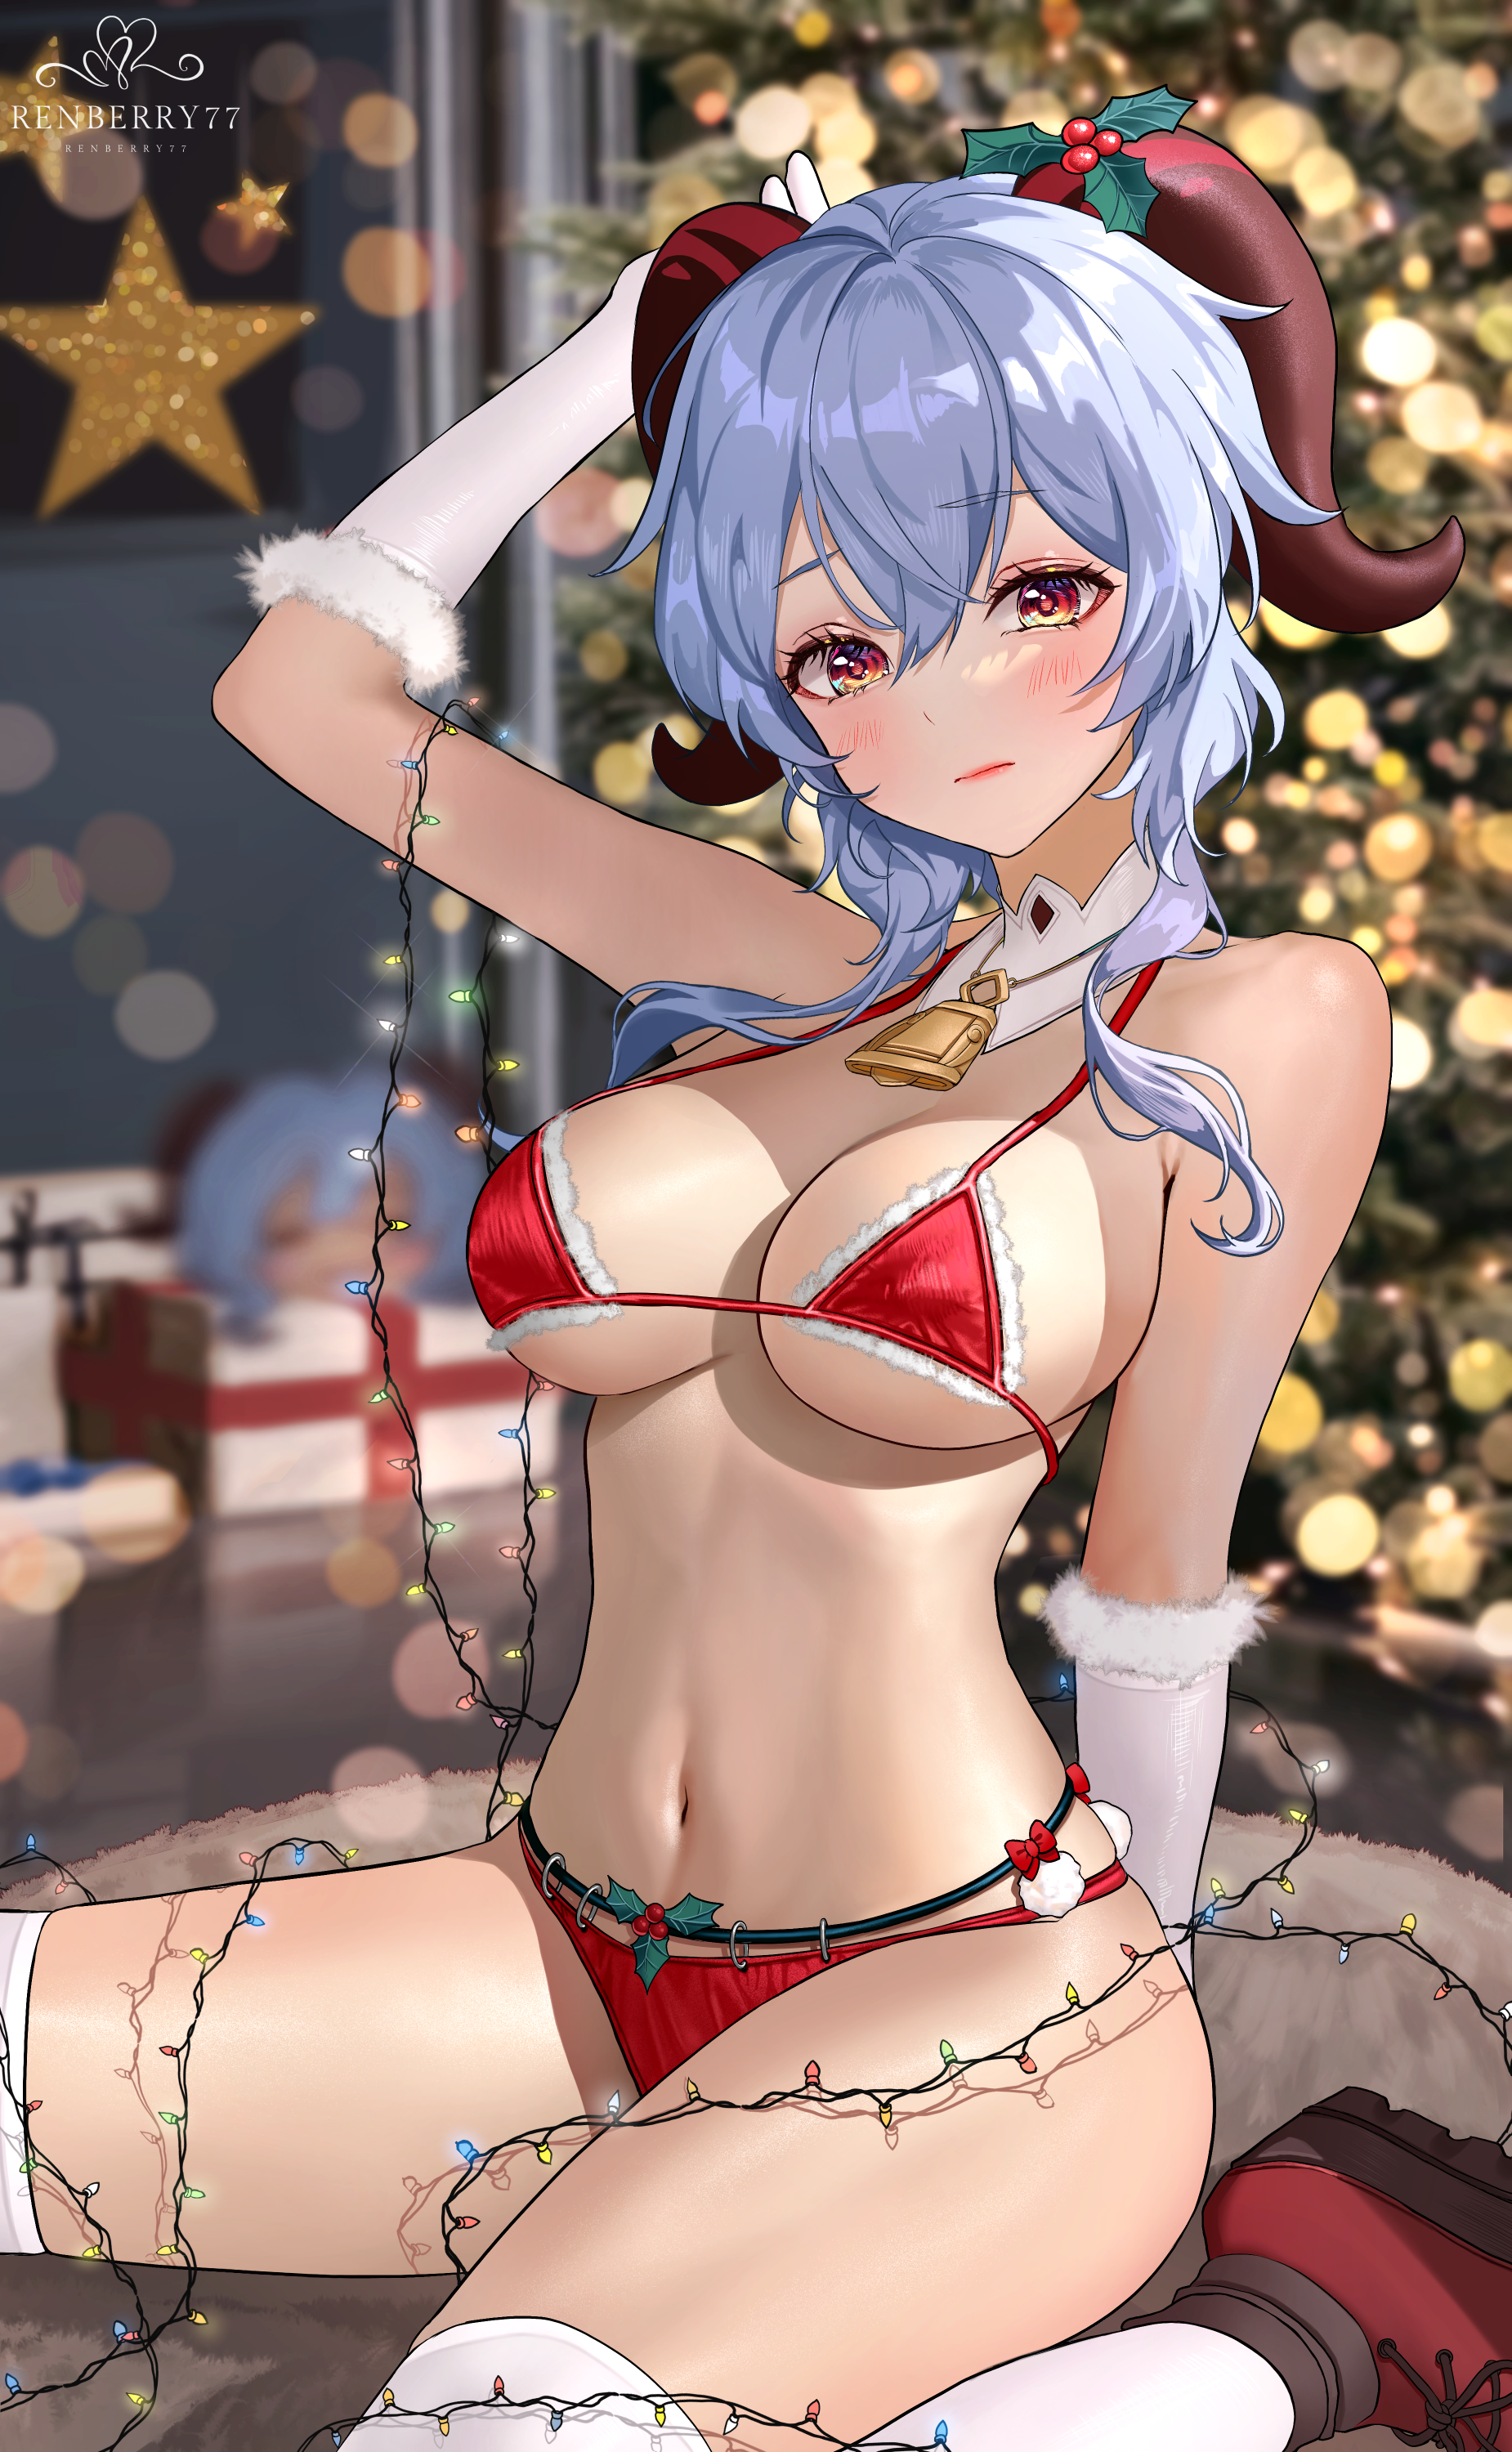 Anime 1850x3000 anime girls boobs Ganyu (Genshin Impact) Genshin Impact blue hair gloves Christmas tree horns underwear Christmas lights renberry77